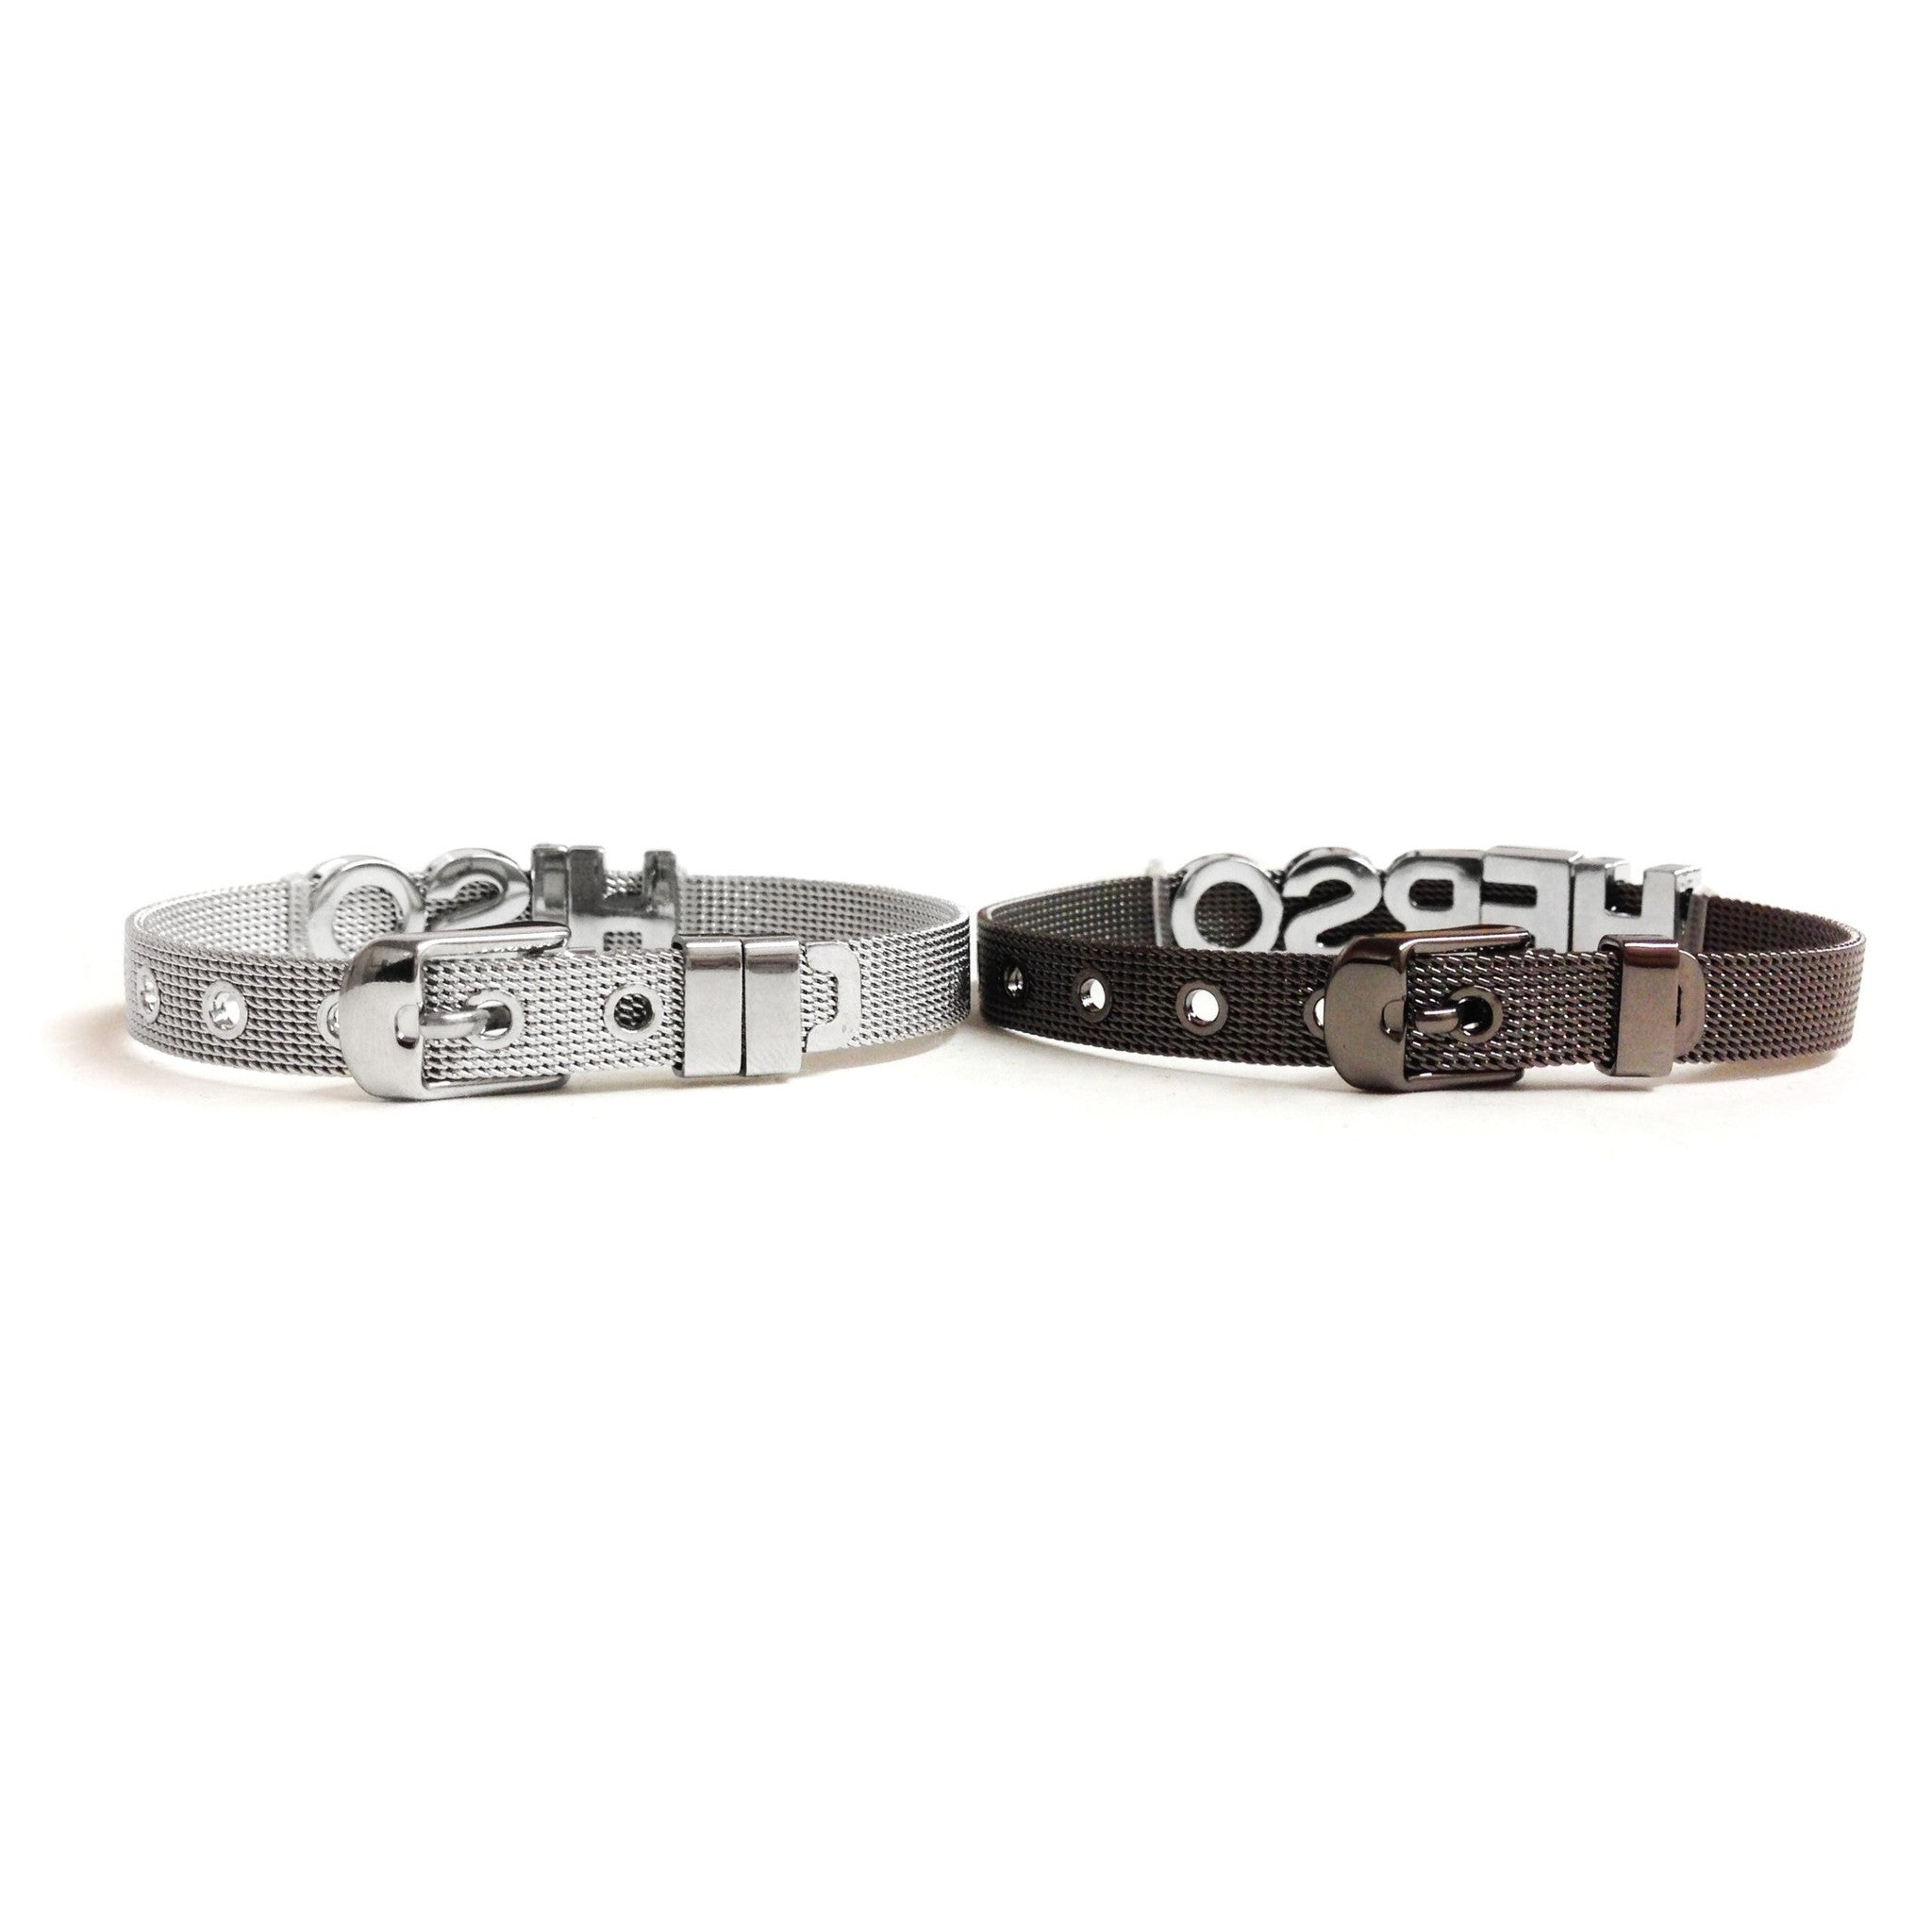 His & Hers Couple Bracelet Set (Stainless Steel & Gunmetal)